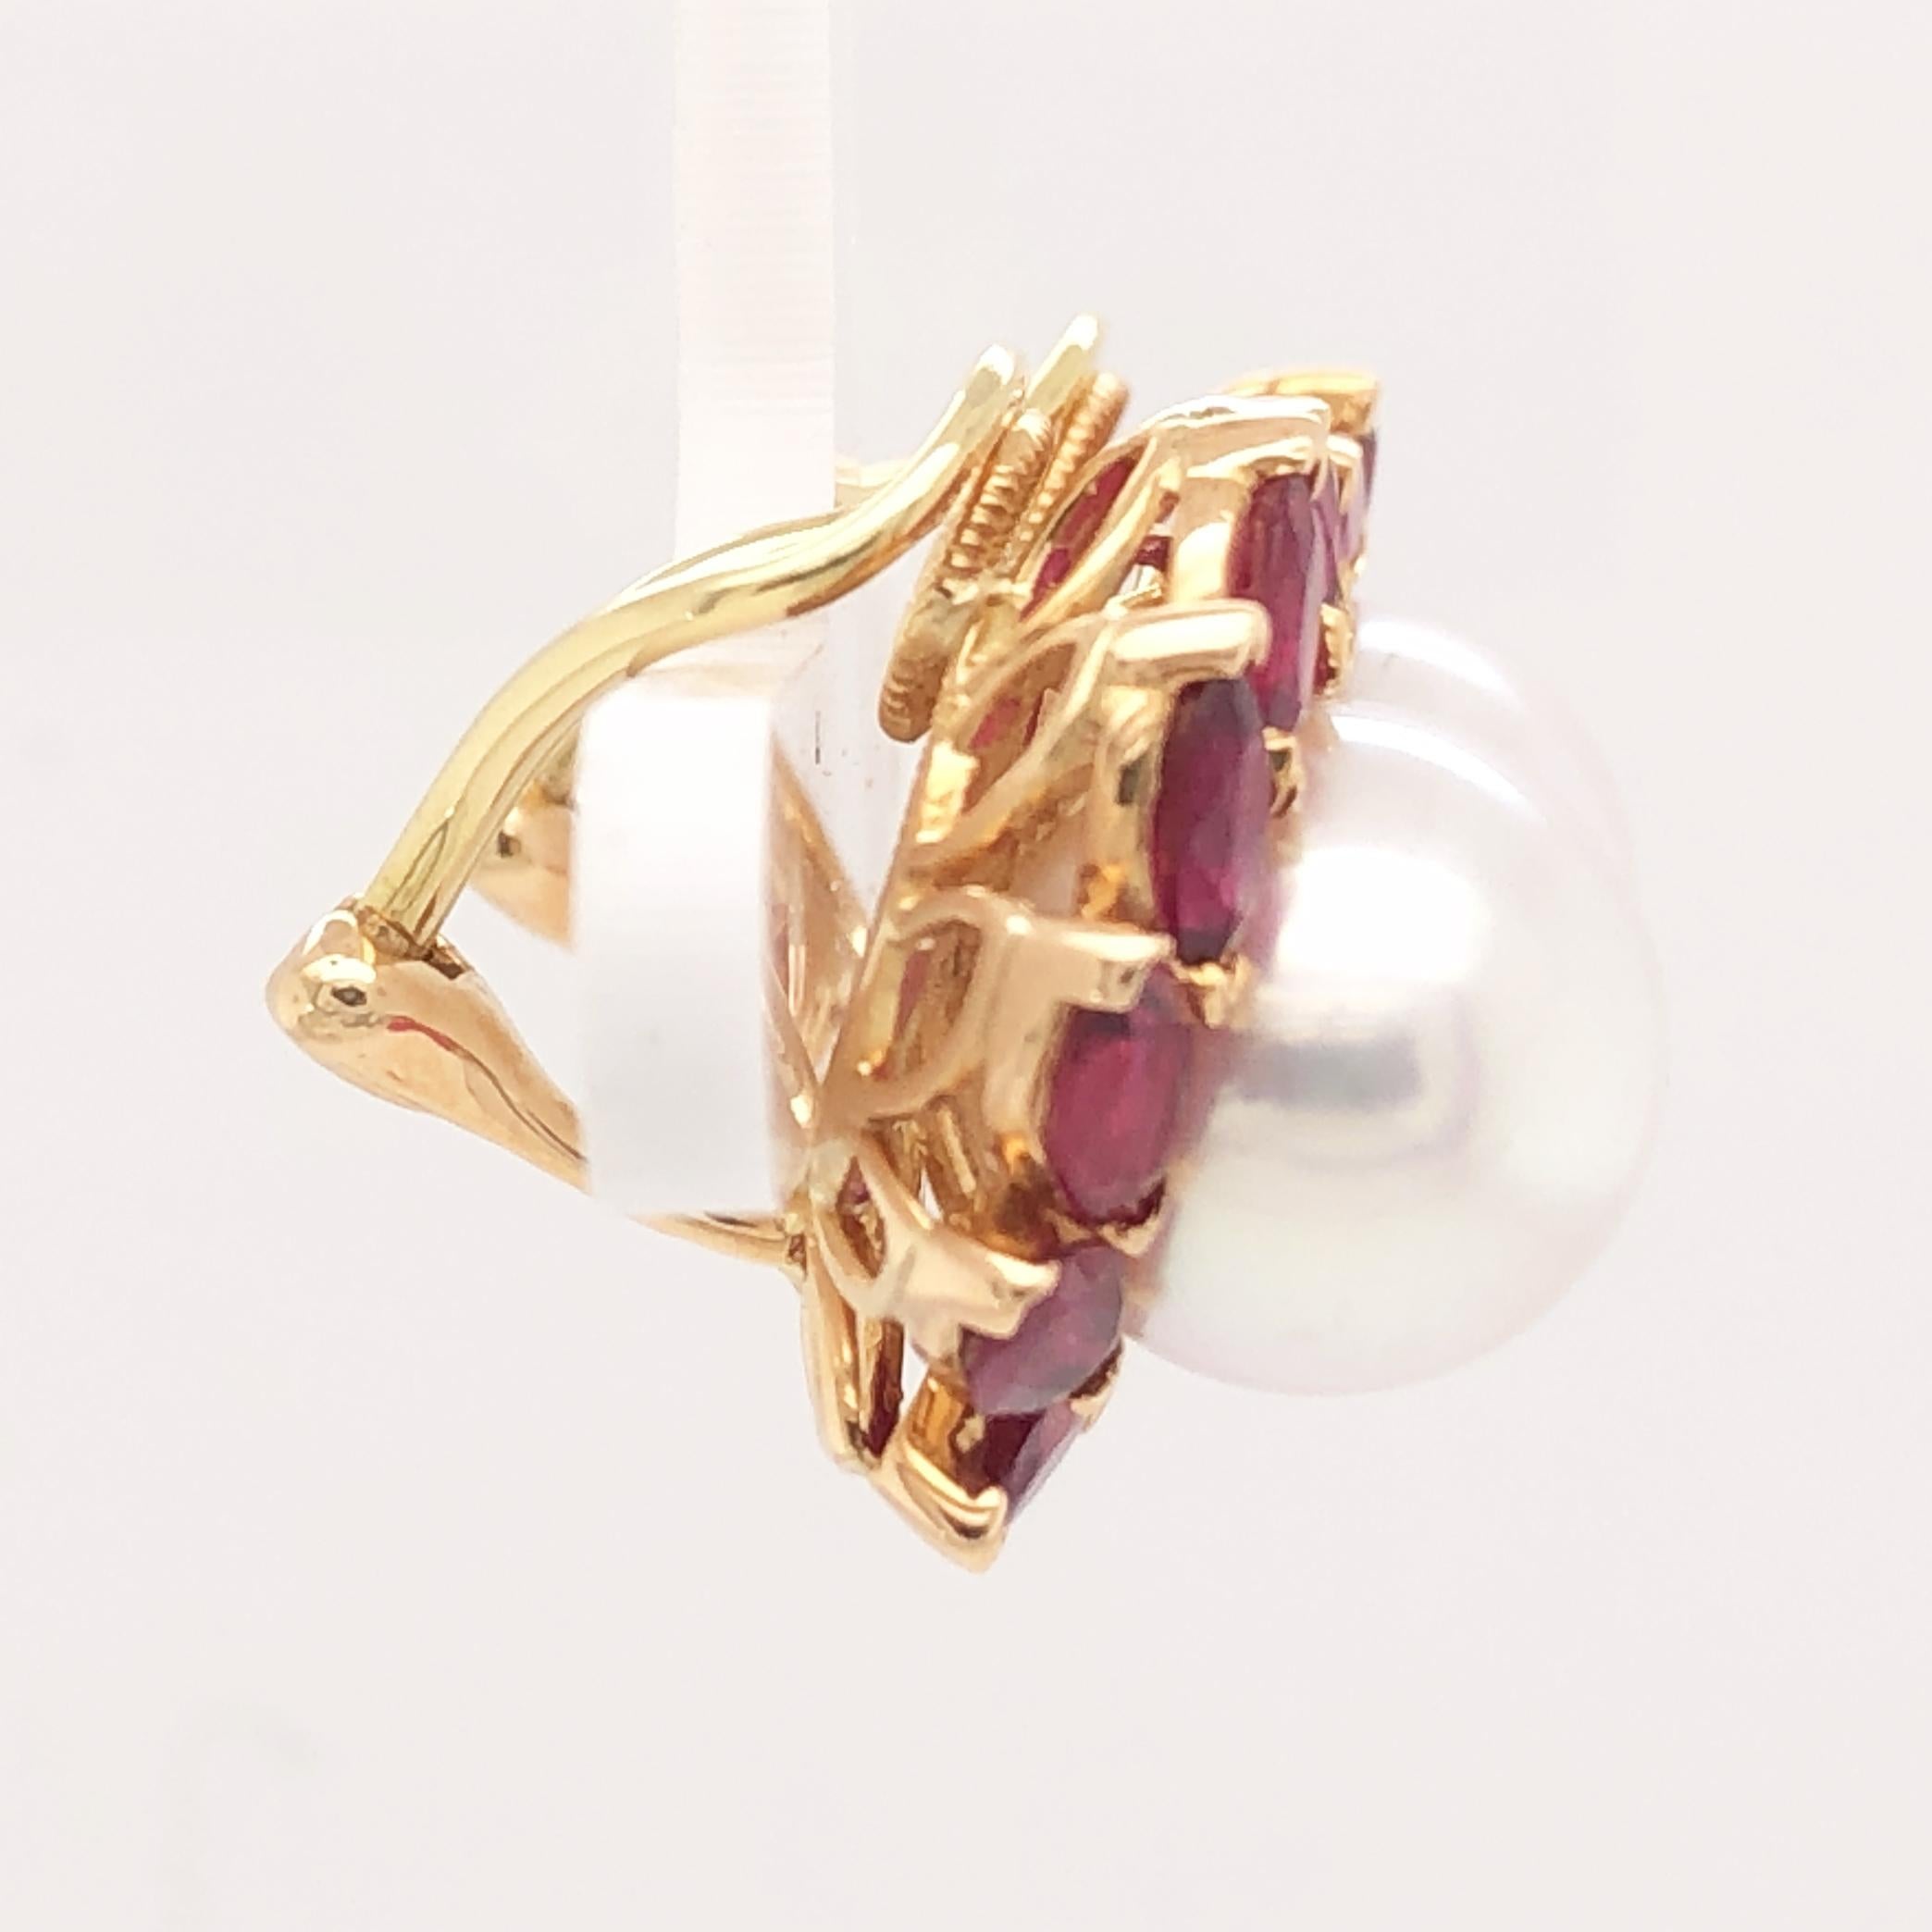 Contemporary Oscar Heyman 18 Karat Gold South Sea Pearl and Ruby Clip Earrings